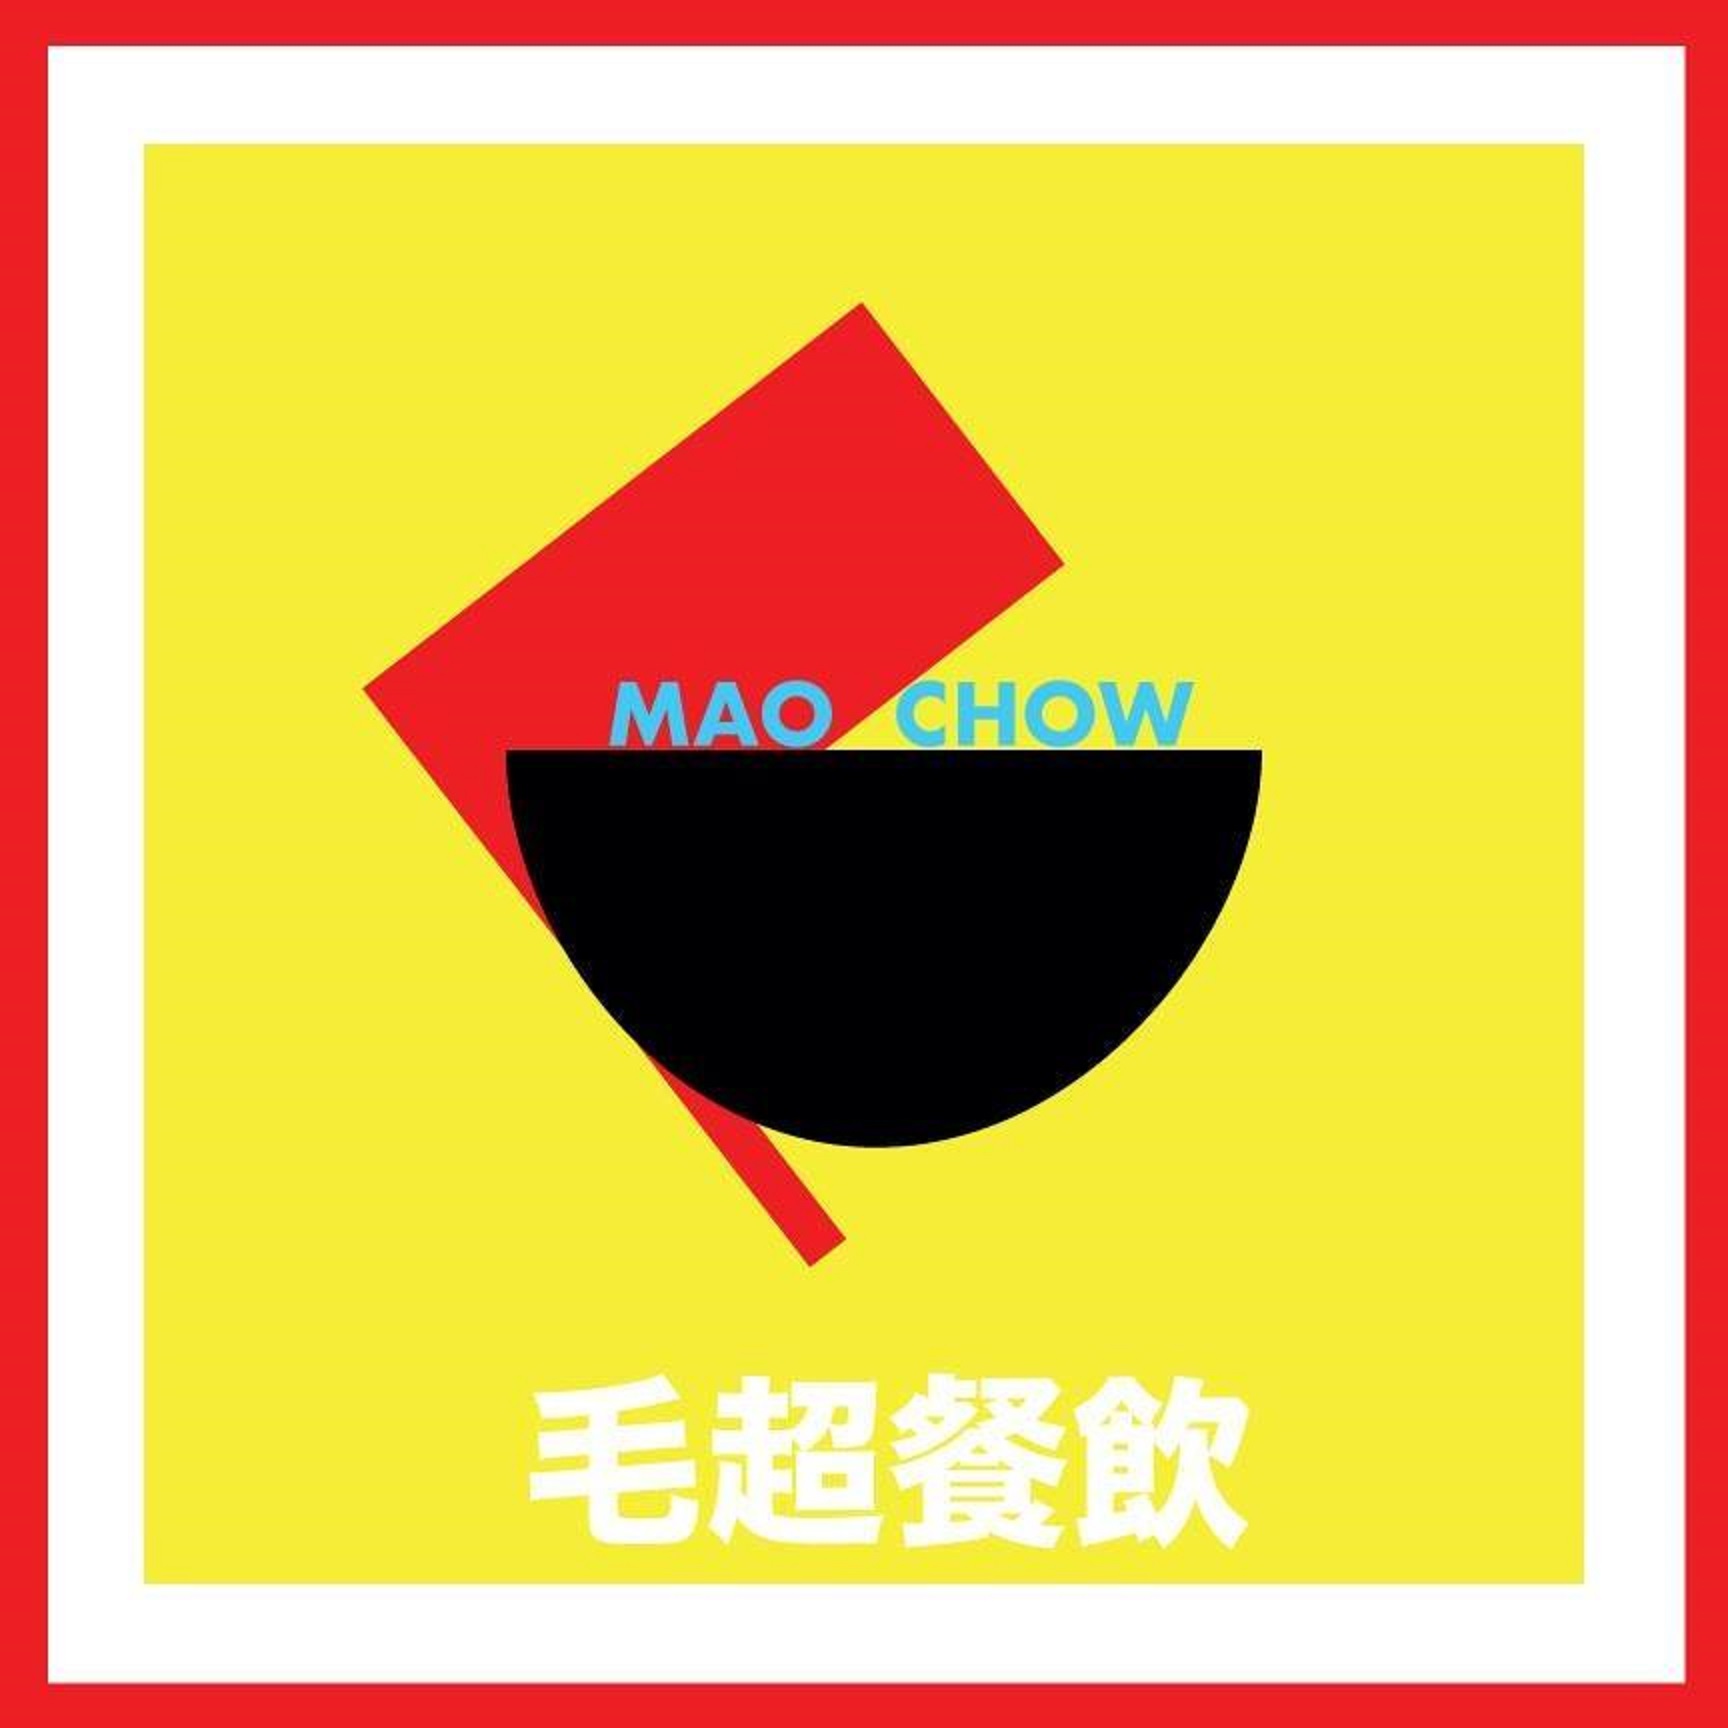 Mao Chow